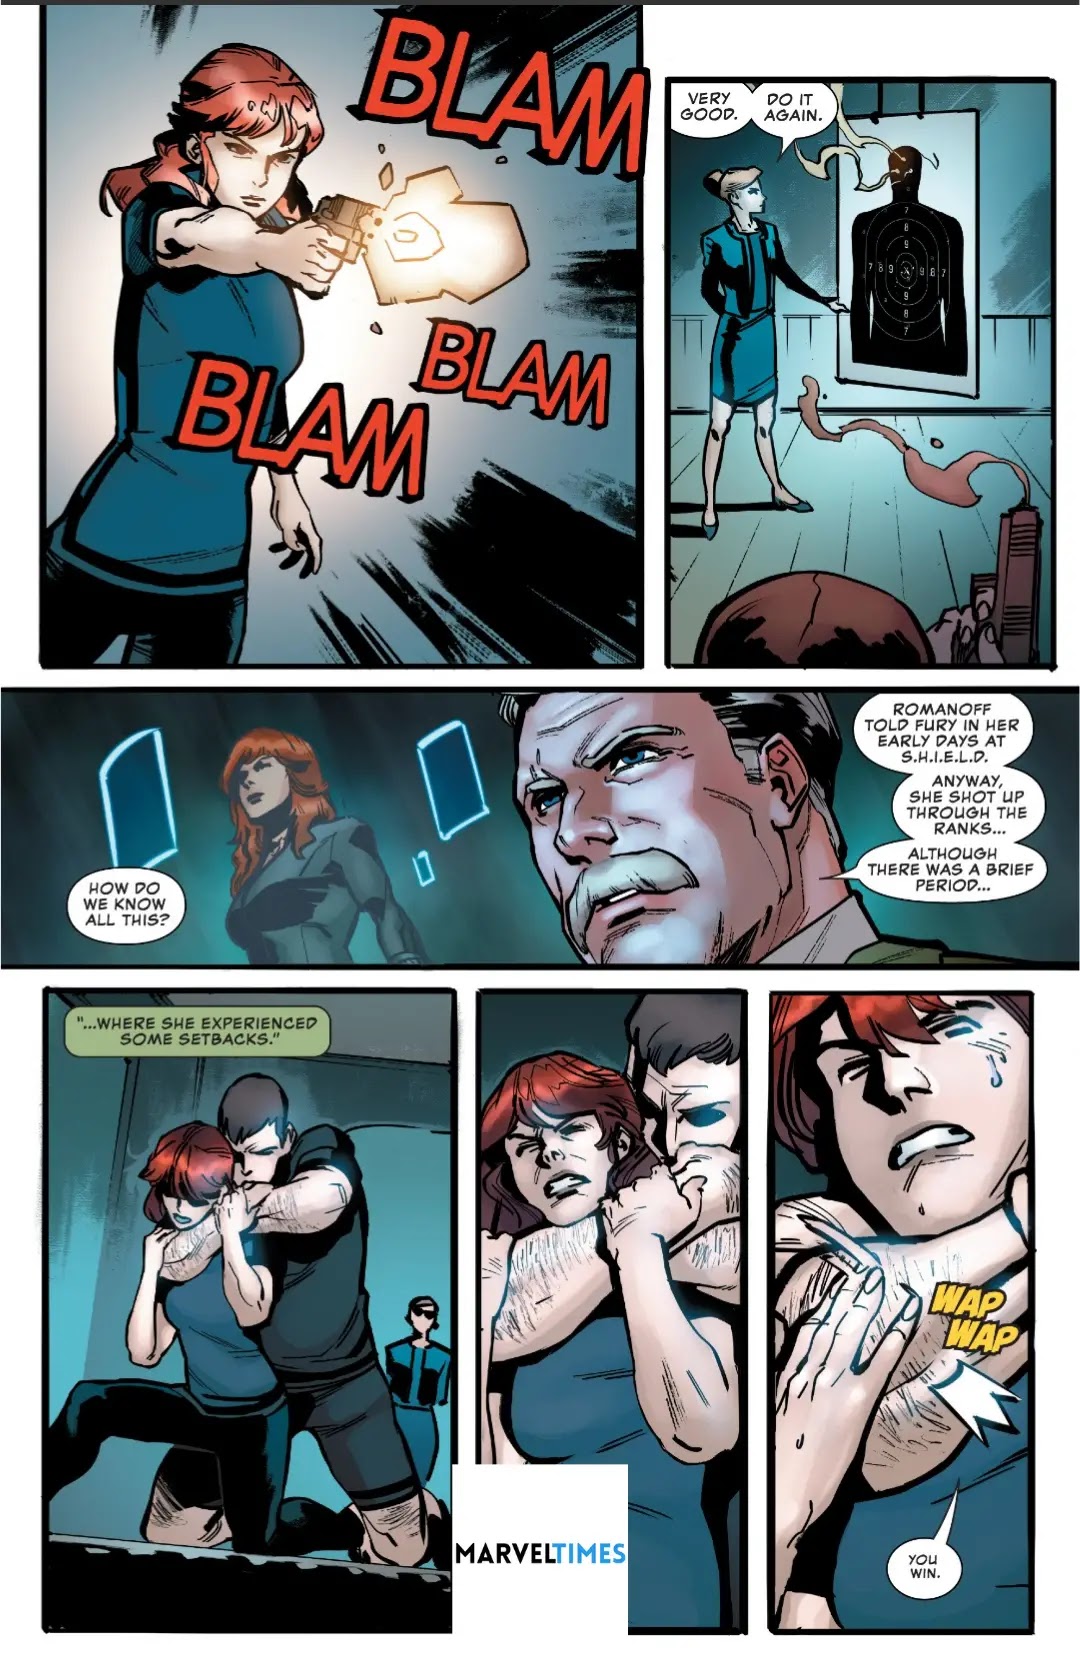 Black Widow prelude : Part 1 | Marvel Cinematic Universe